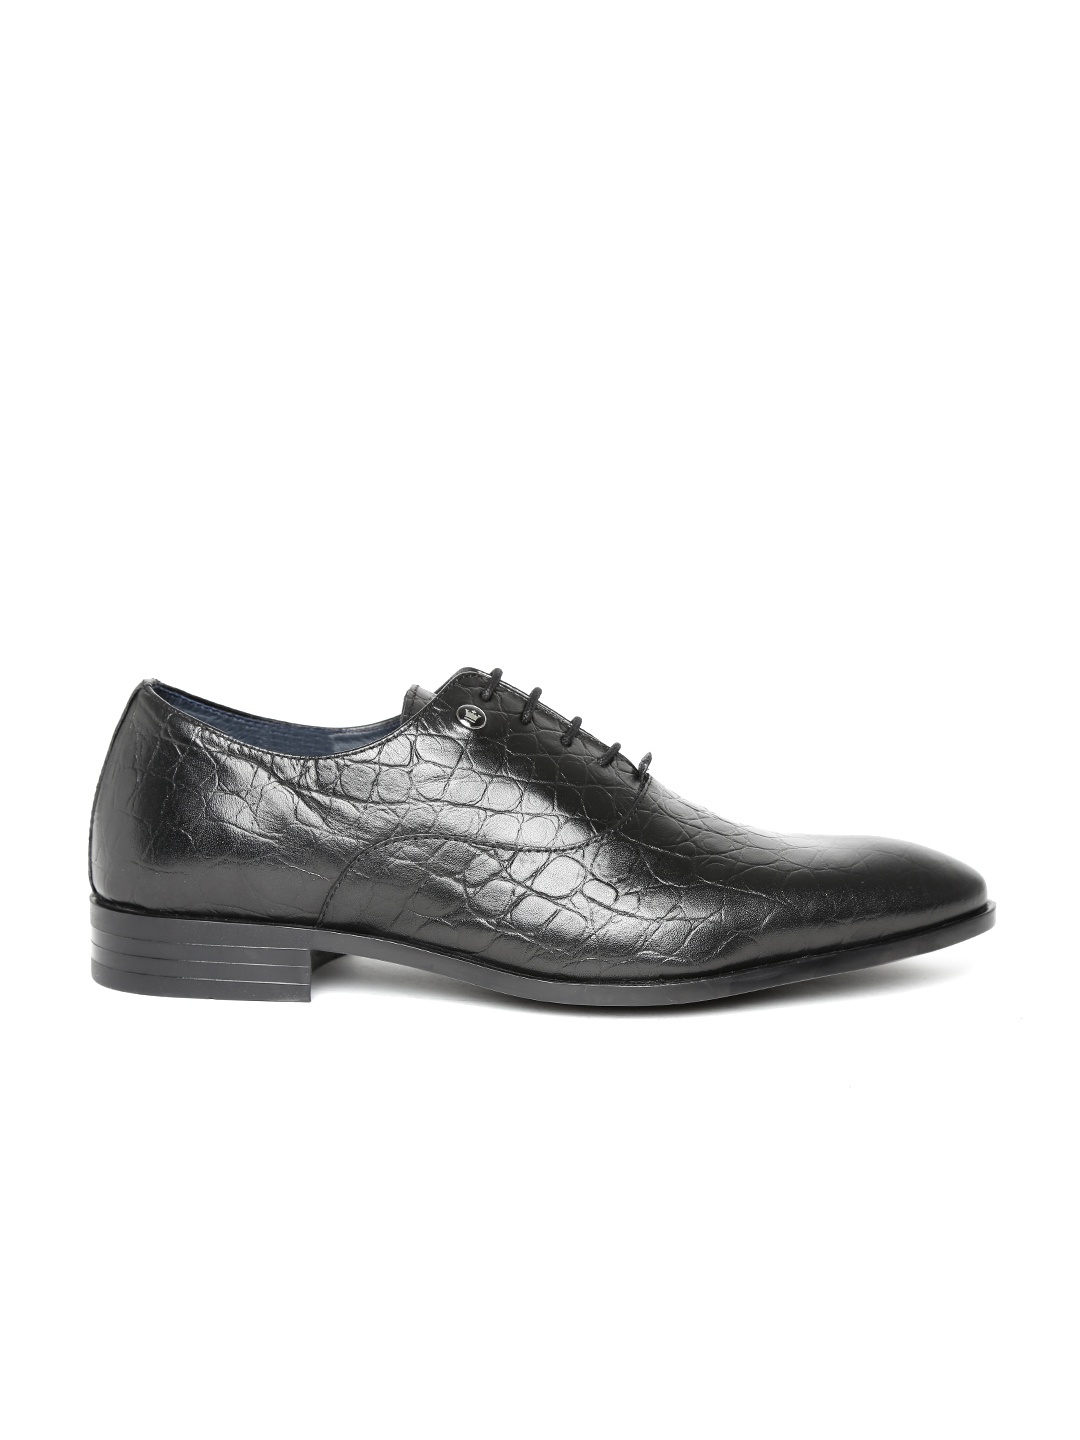 Myntra Louis Philippe Men Black Leather Formal Shoes 672668 | Buy Myntra Louis Philippe Formal ...